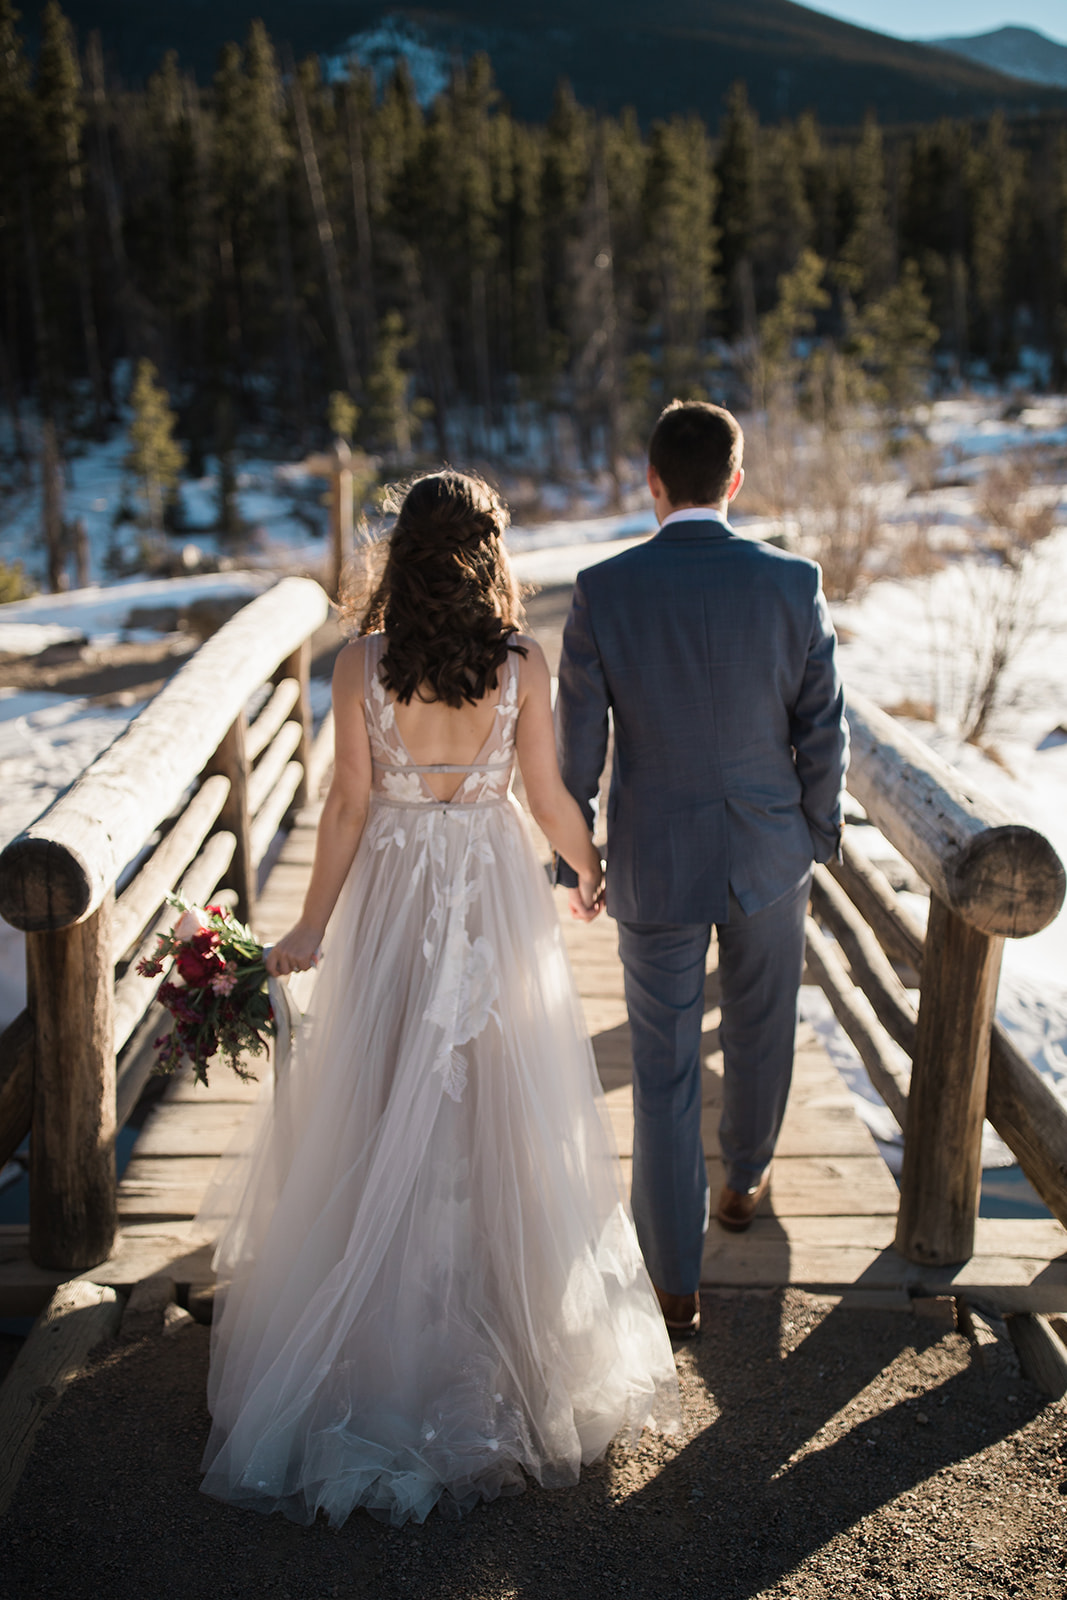 bride and groom pose on frozen Colorado mountain lake